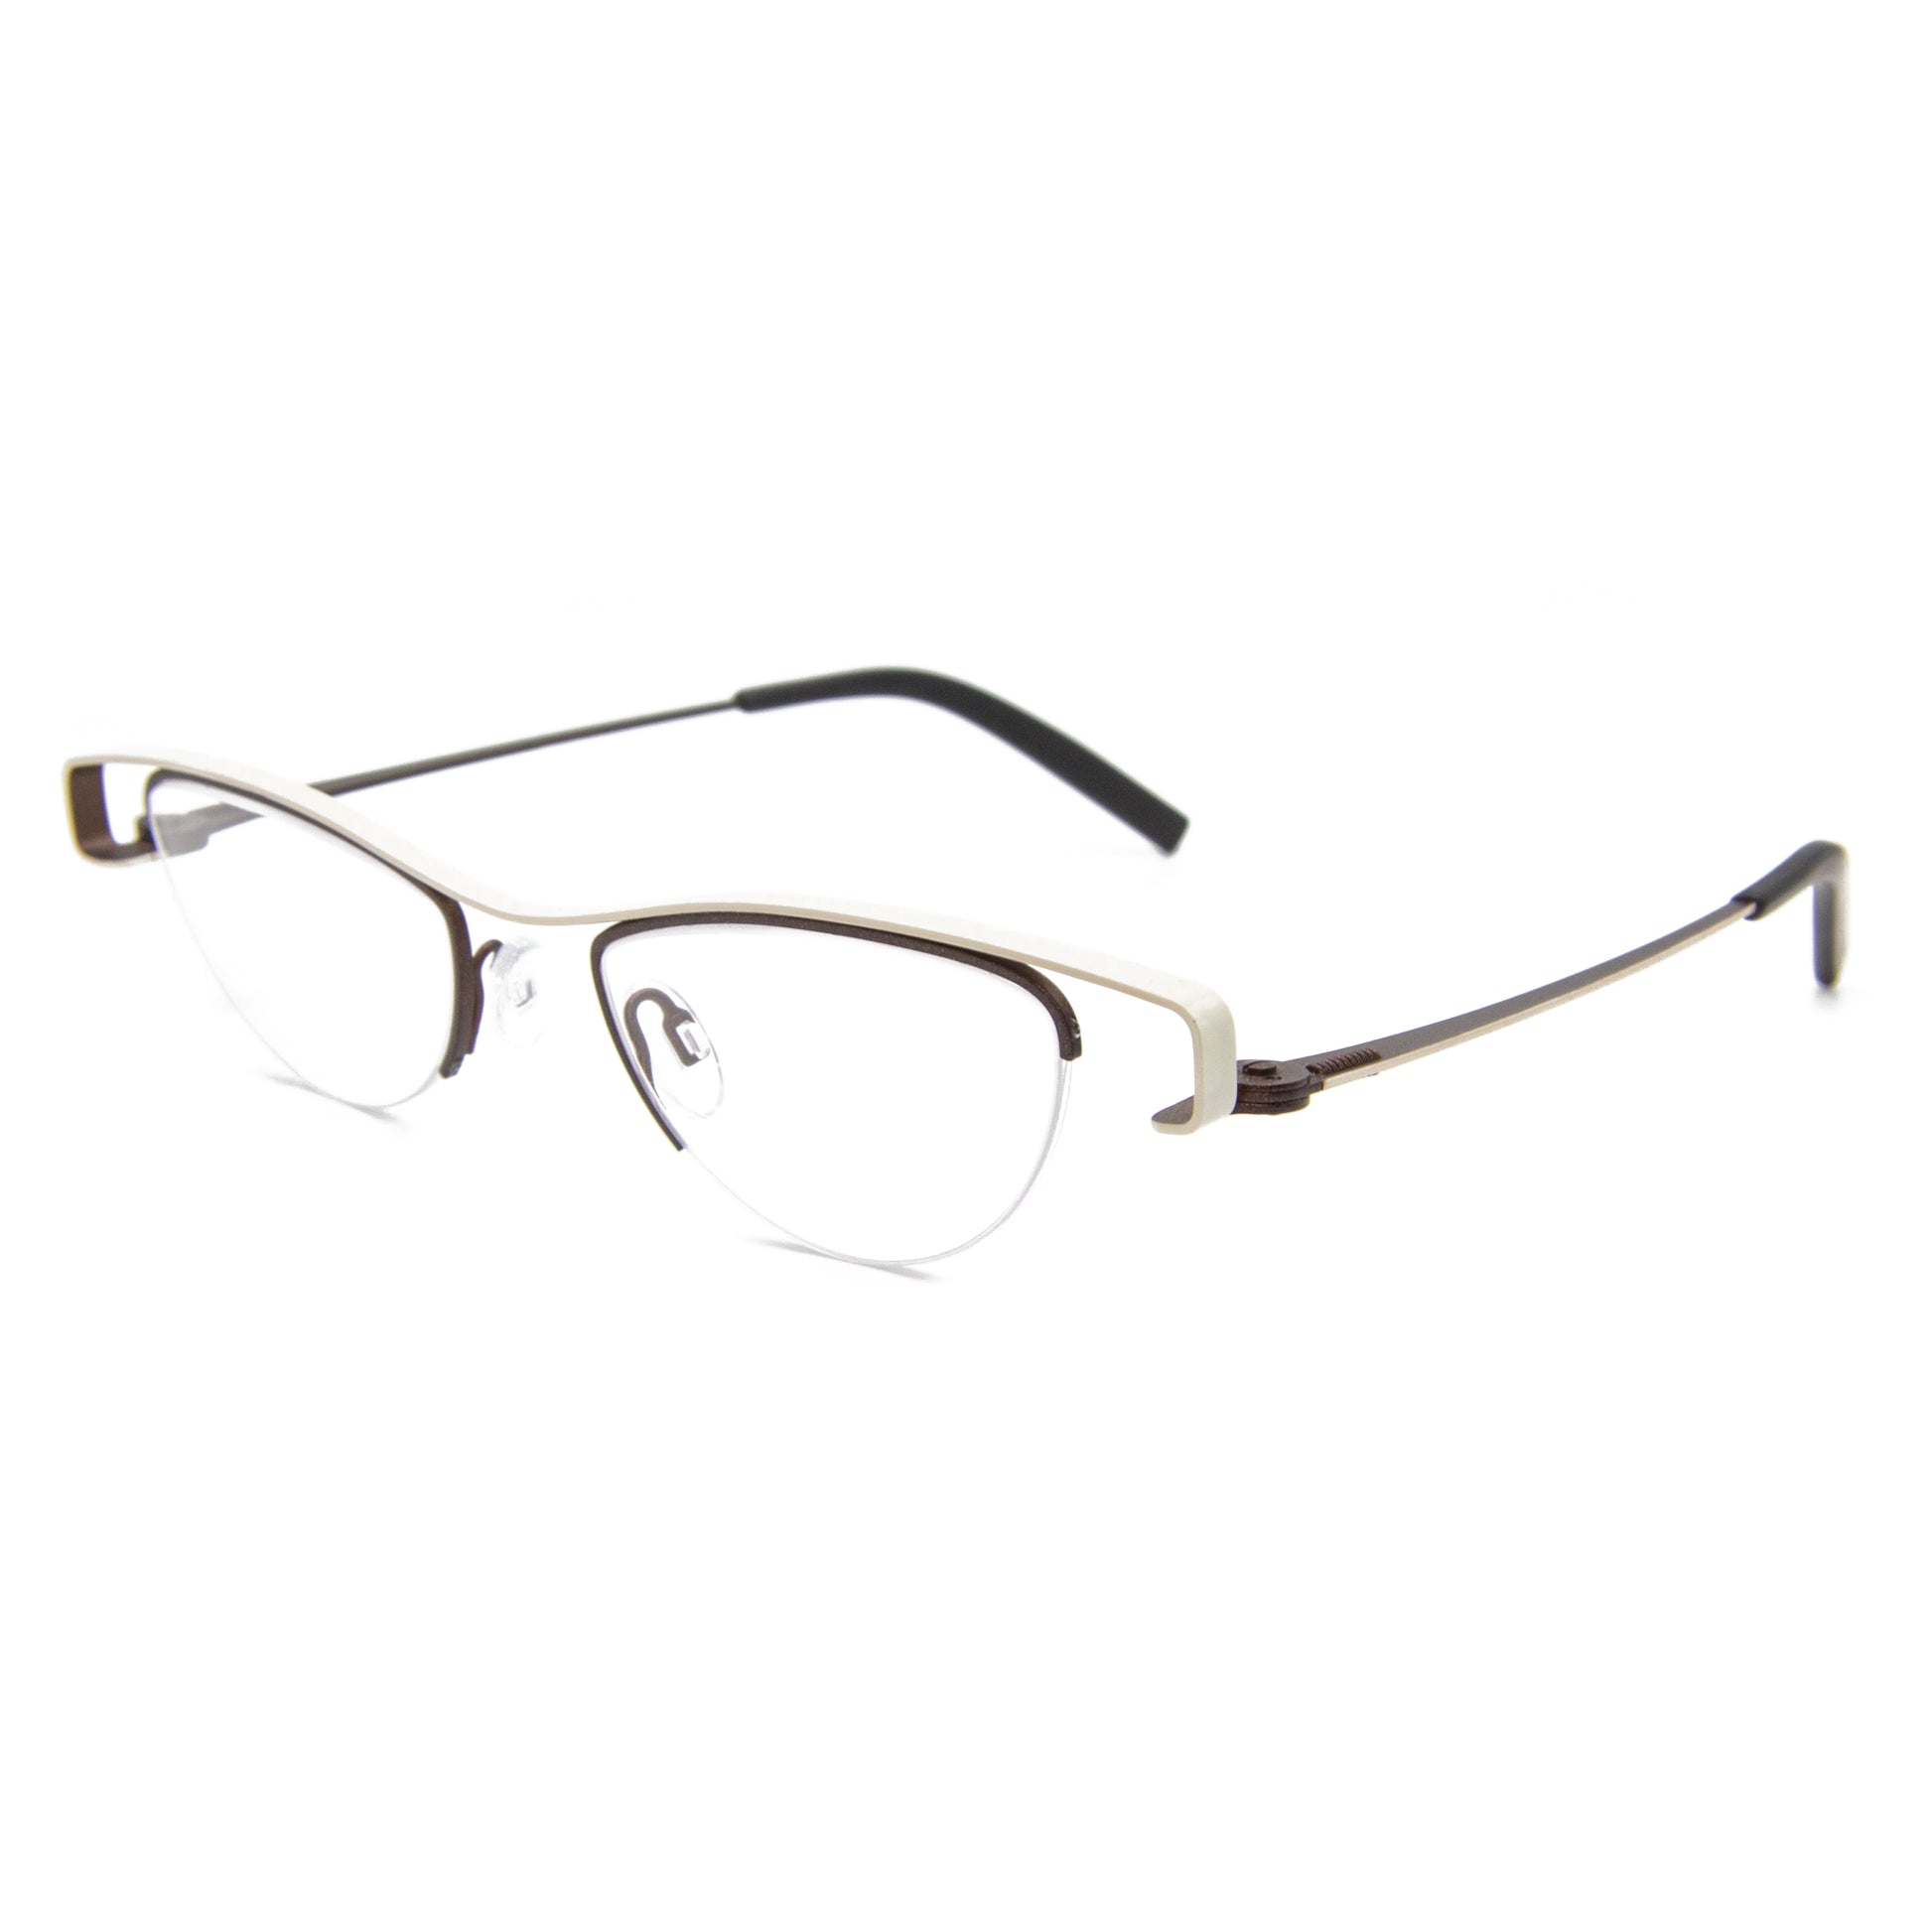 Theo - Eyewear - Knoedel  - 199 - Glasses